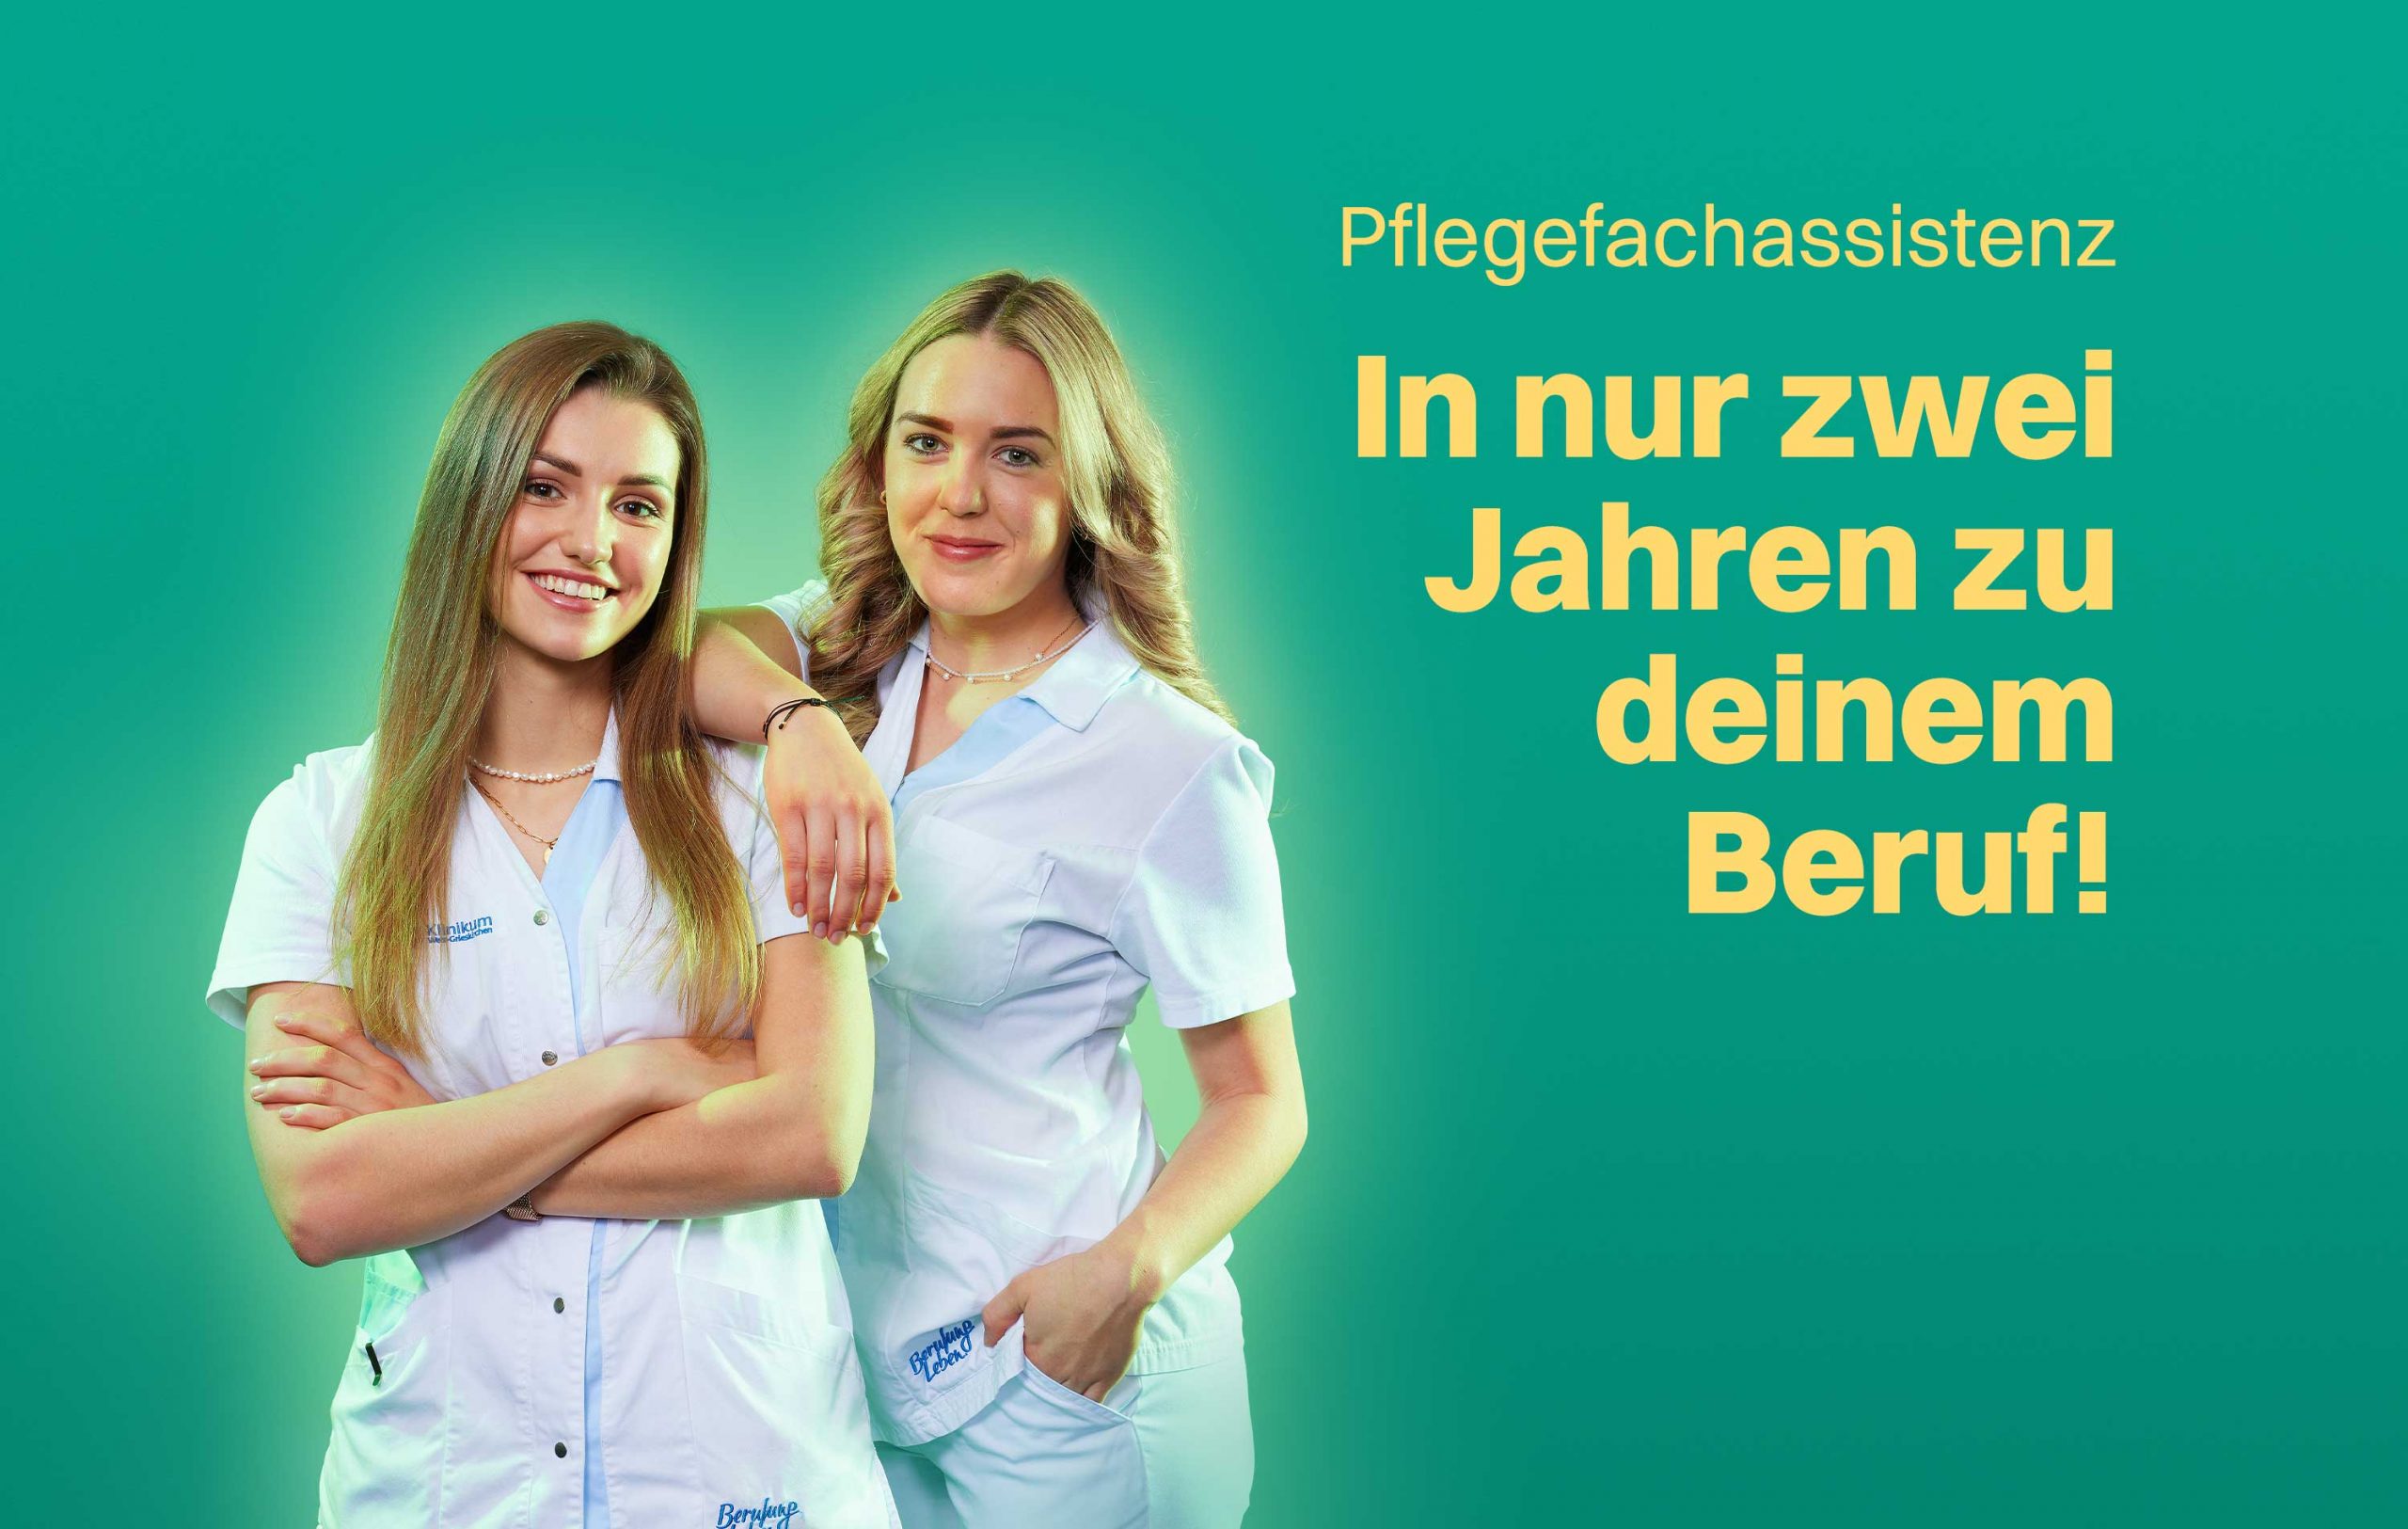 klinikum_pflegekampagne_pflegefachassistenz-desktop